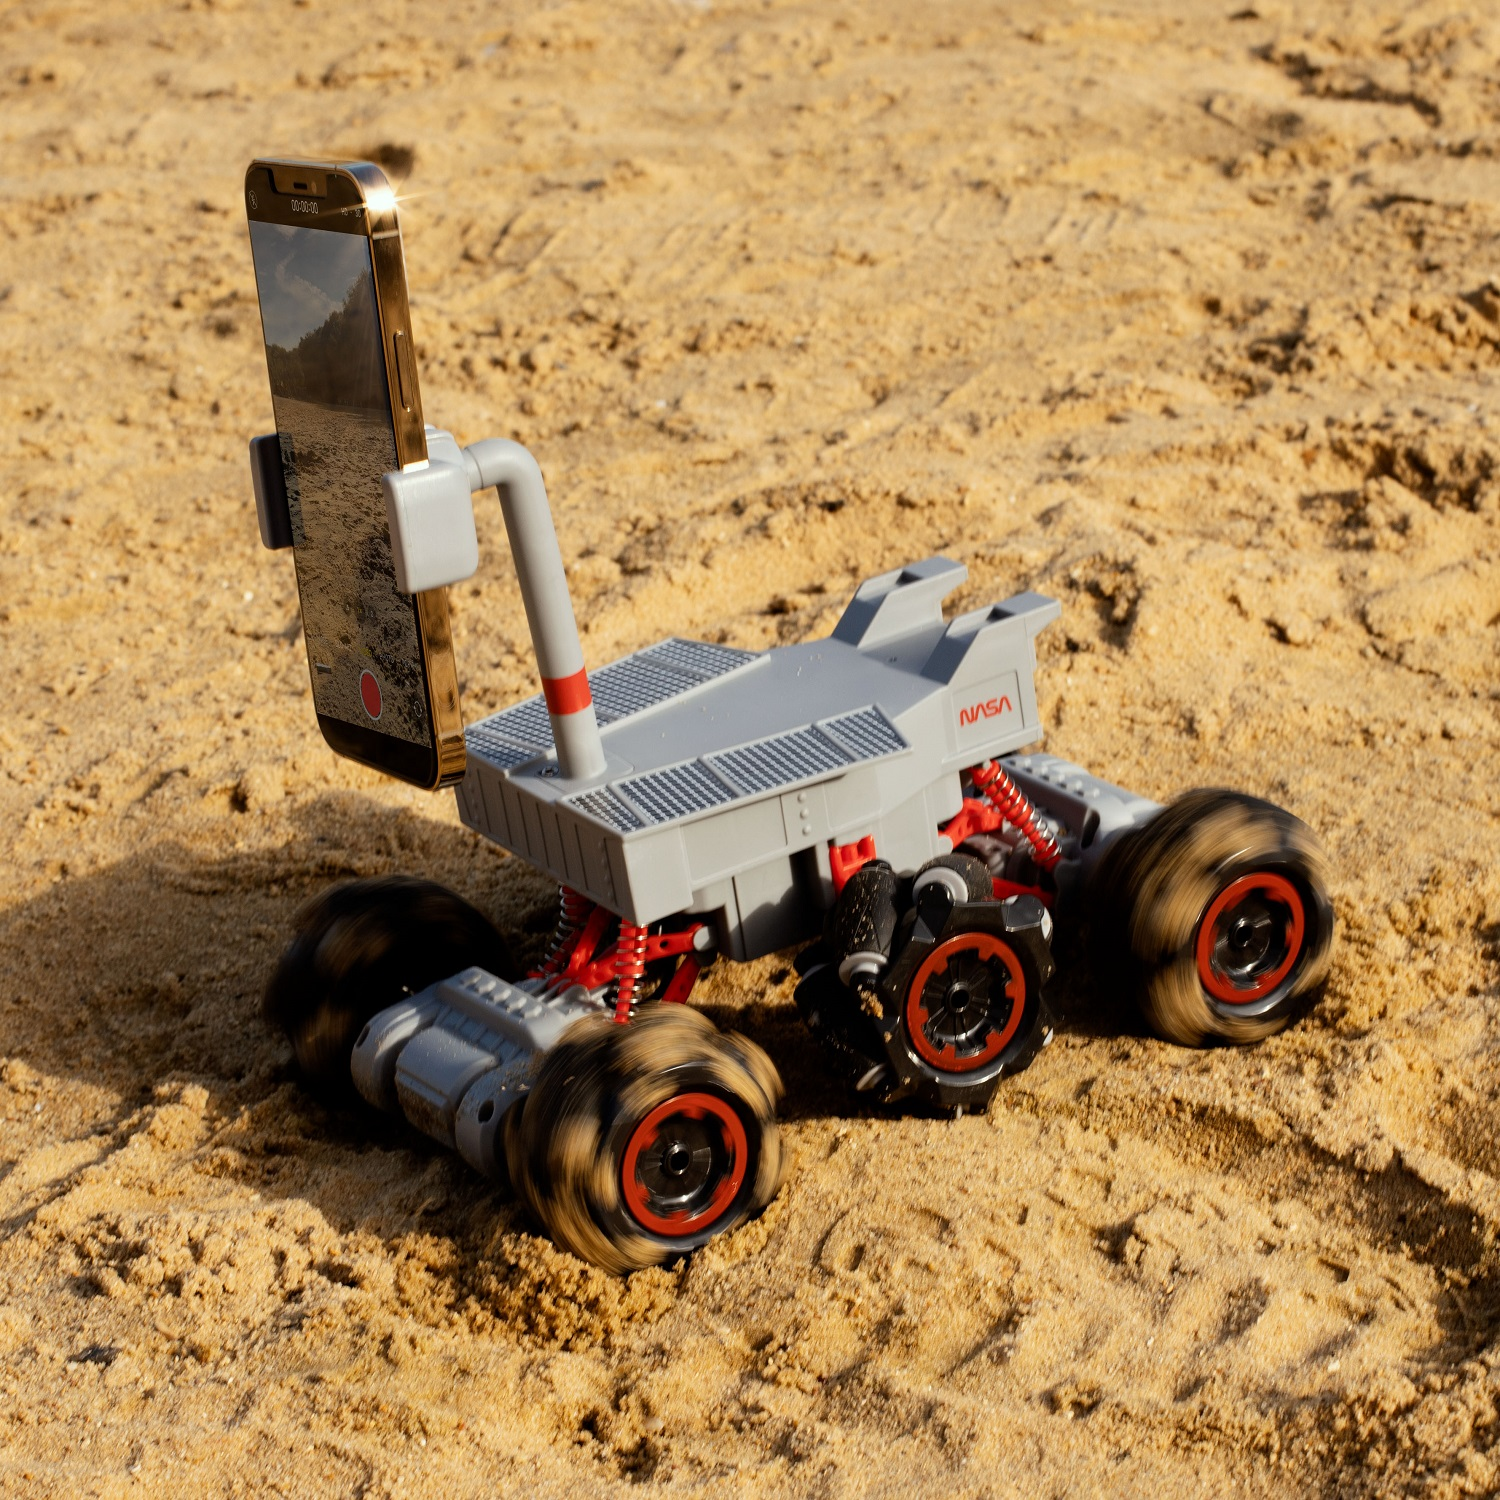 THUMBS Auto, Grau UP Rover Mars NASA Ferngesteuertes